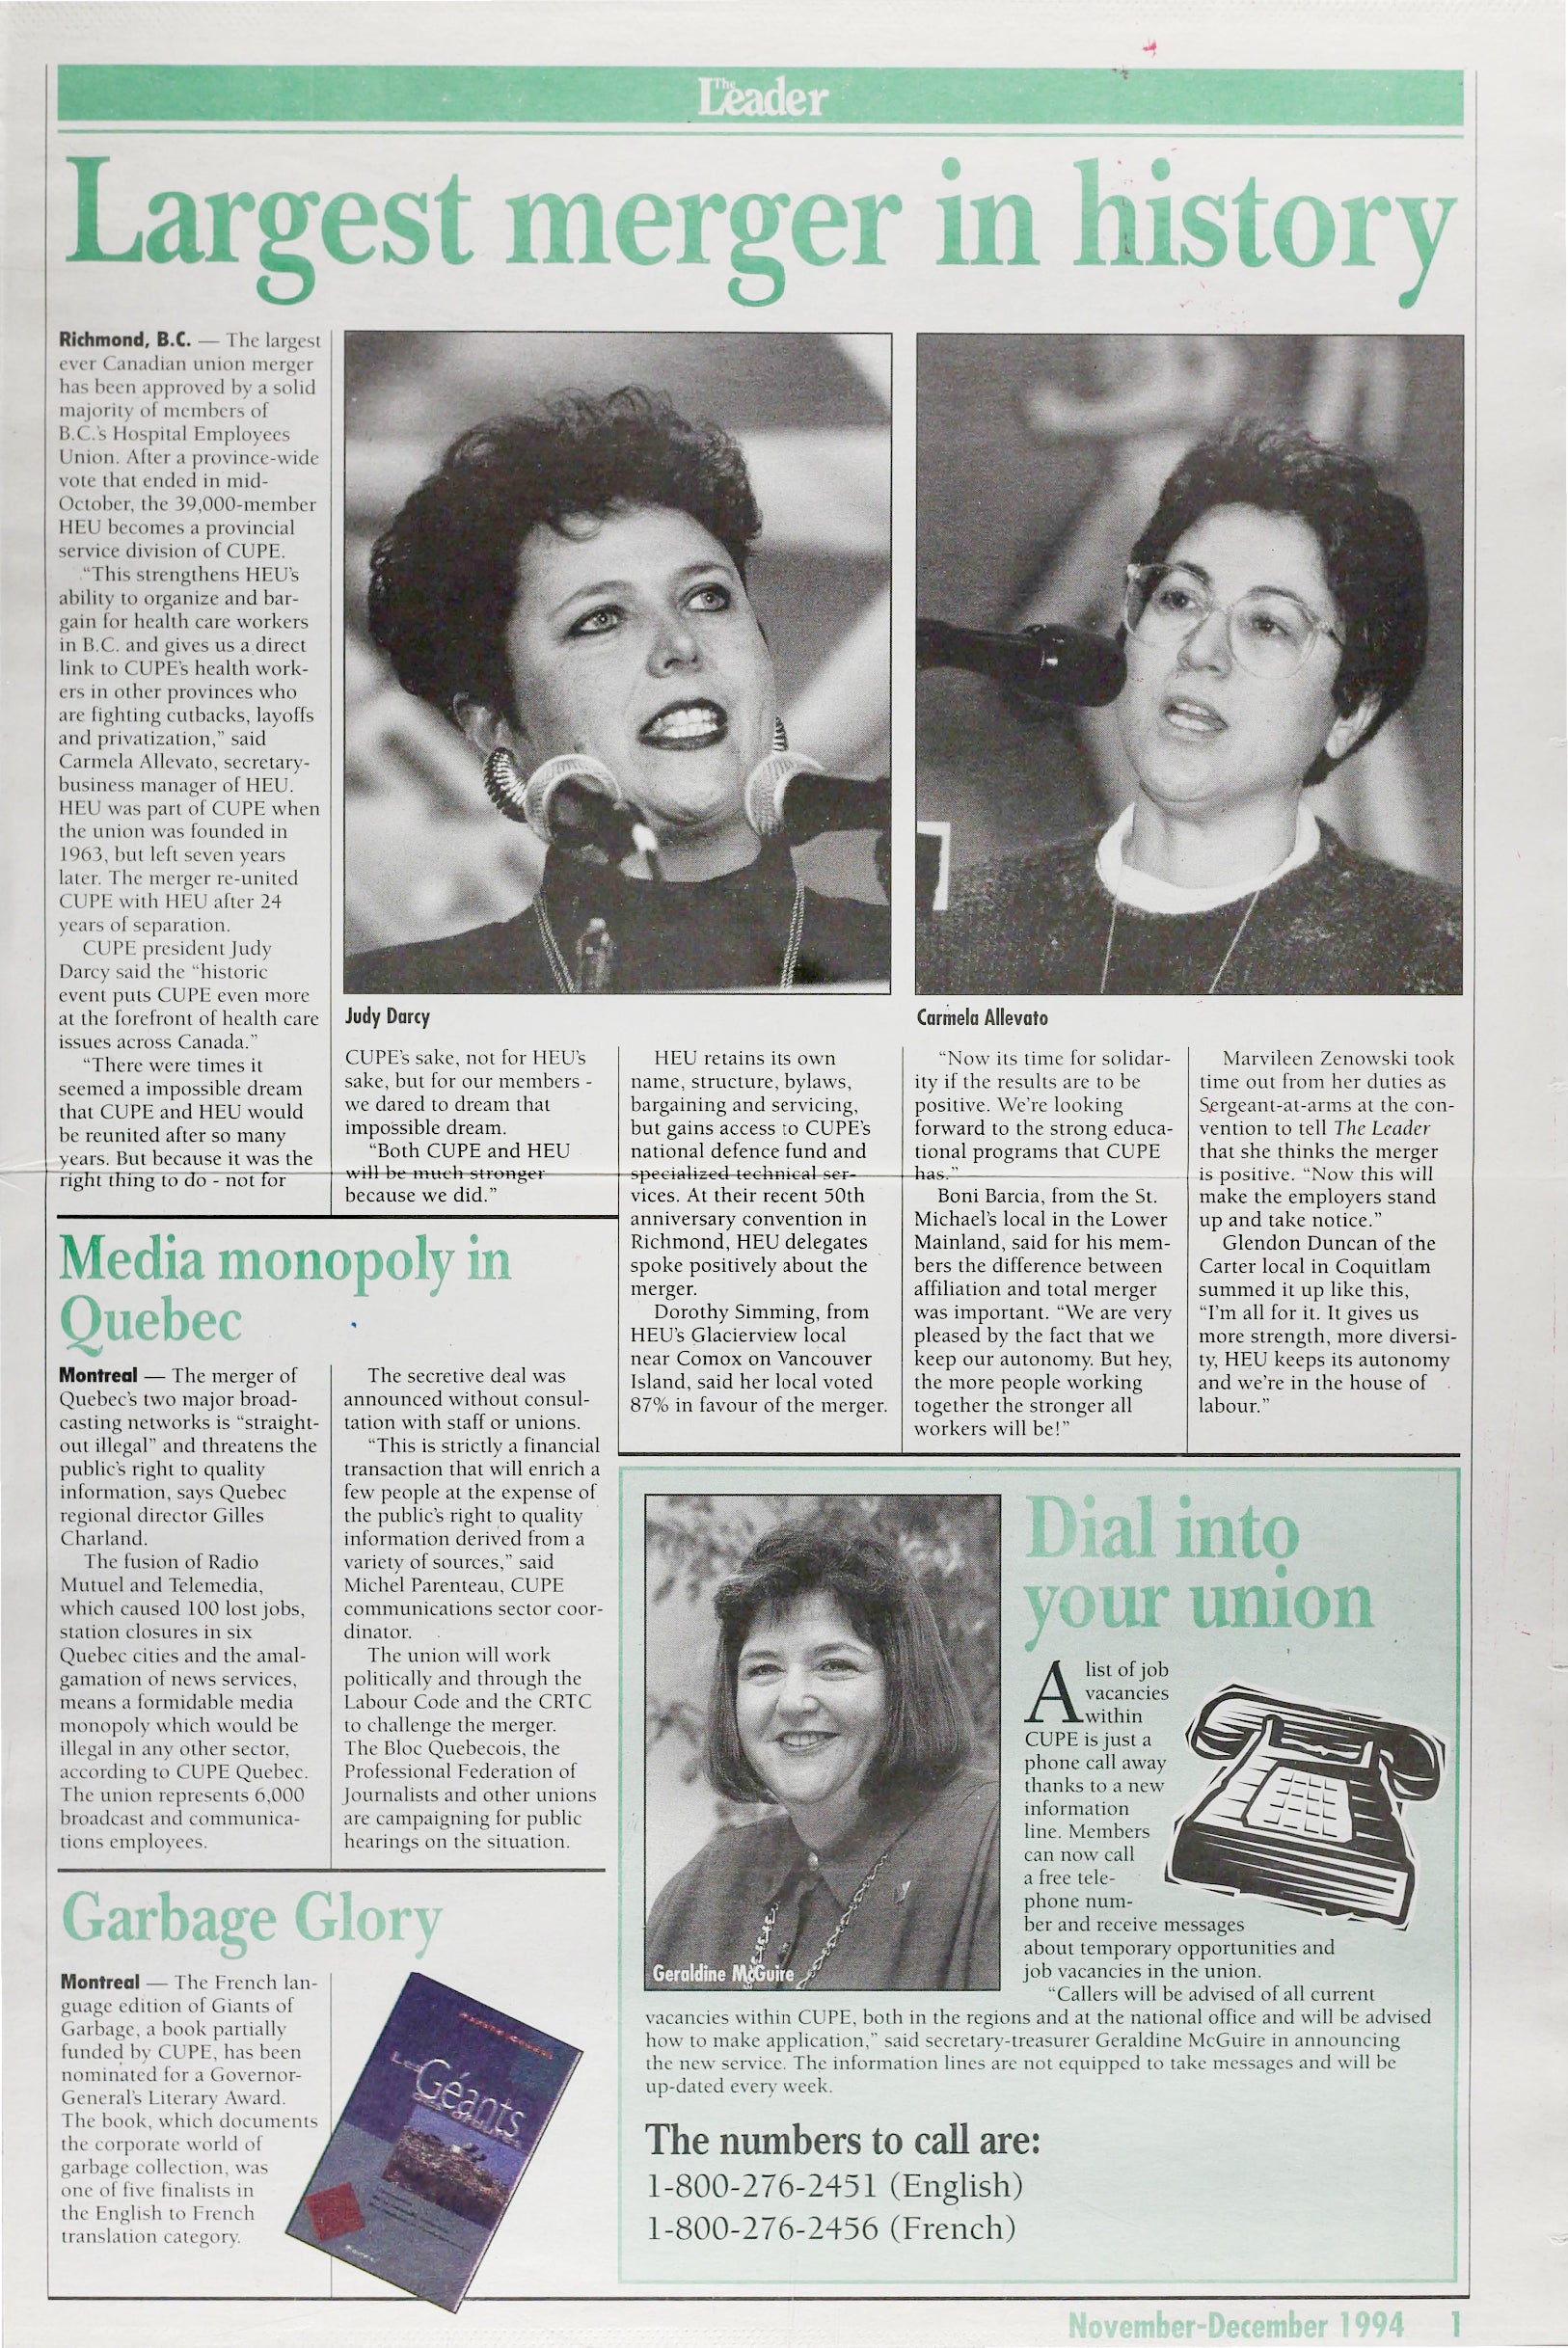 The Leader, CUPE, Nov-Dec 1994, p.2 